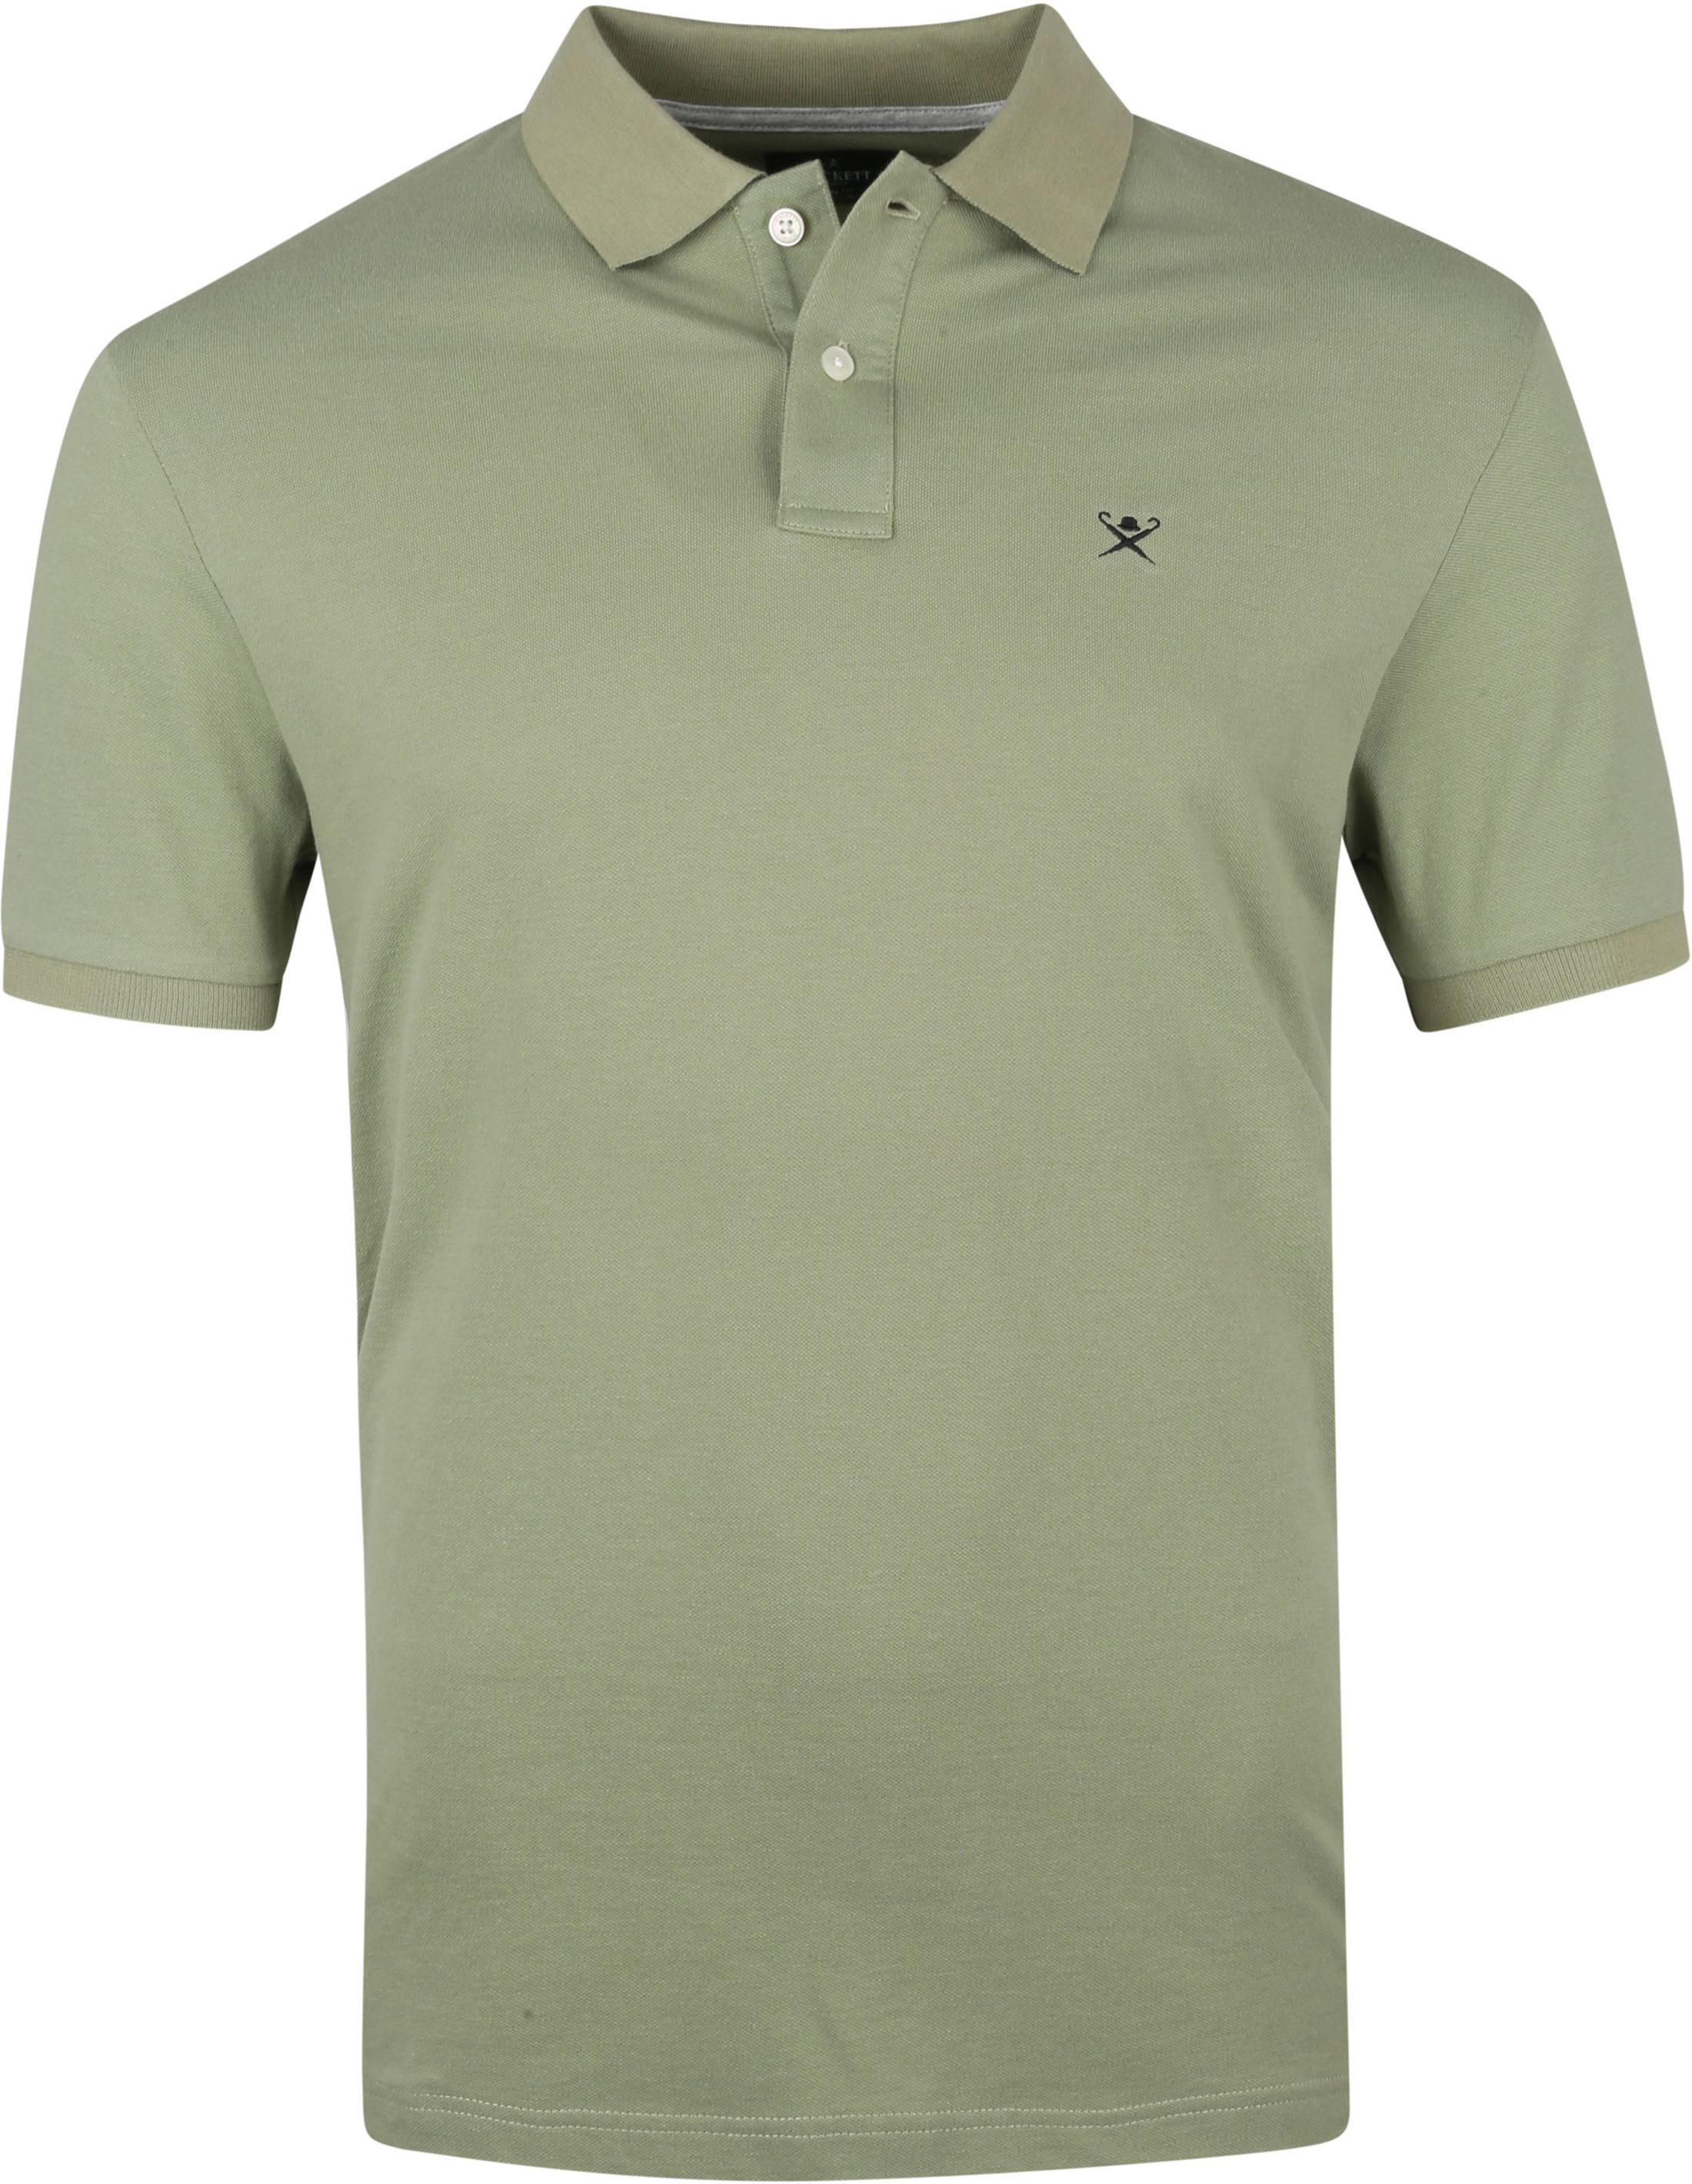 Hackett Polo Shirt Chambry Green size L